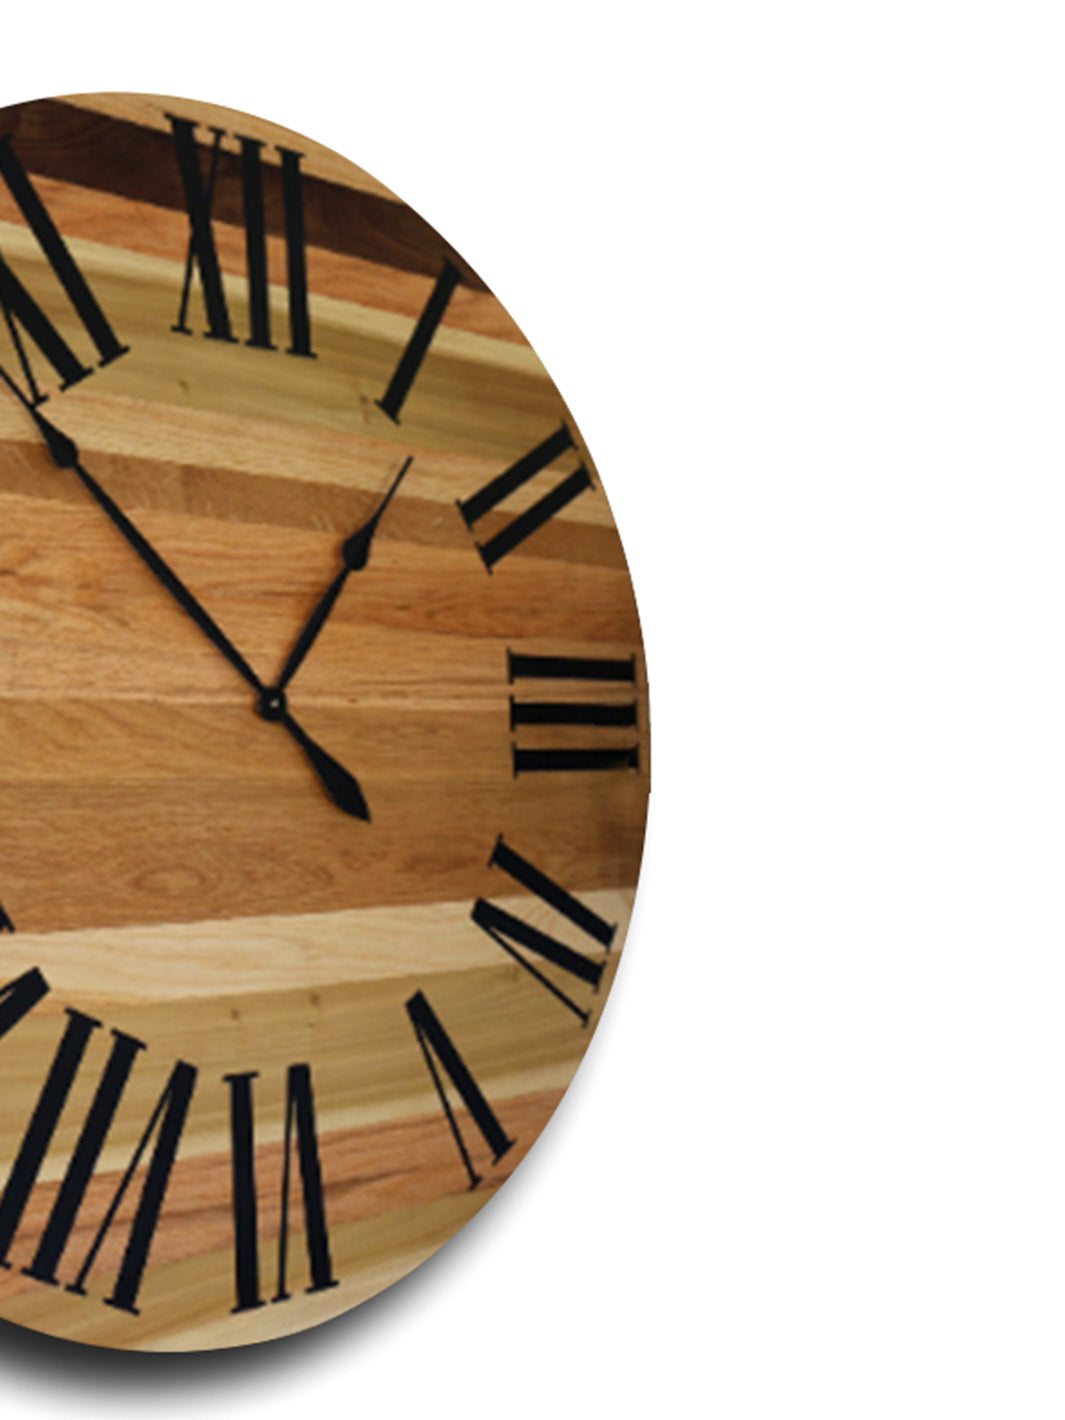 Mixed Salvaged 42" Hardwood Wall Clock (in stock) Earthly Comfort Clocks 1684-1